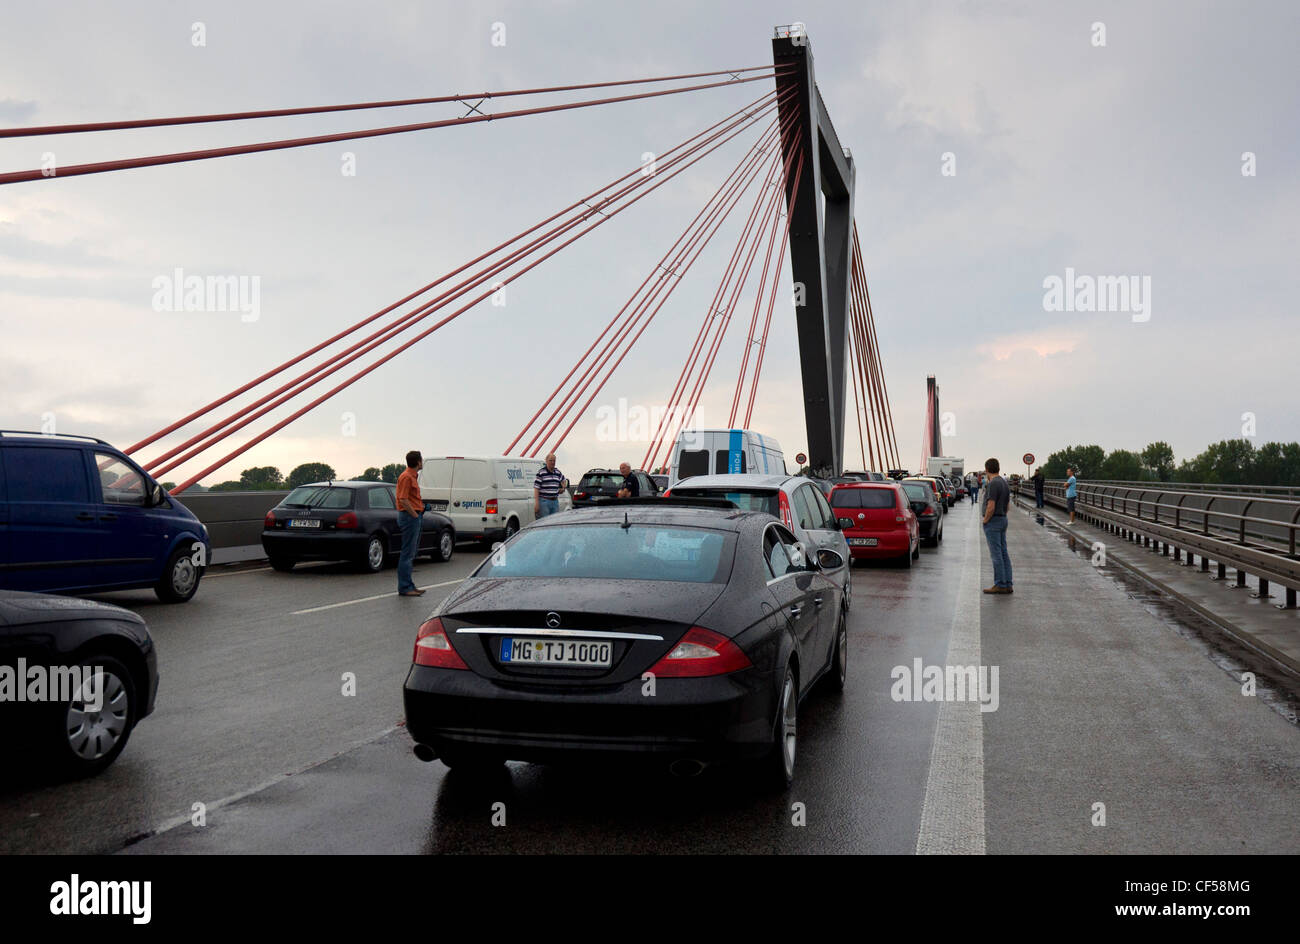 Traffic standing on Autobahn bridge, Germany. Stock Photo